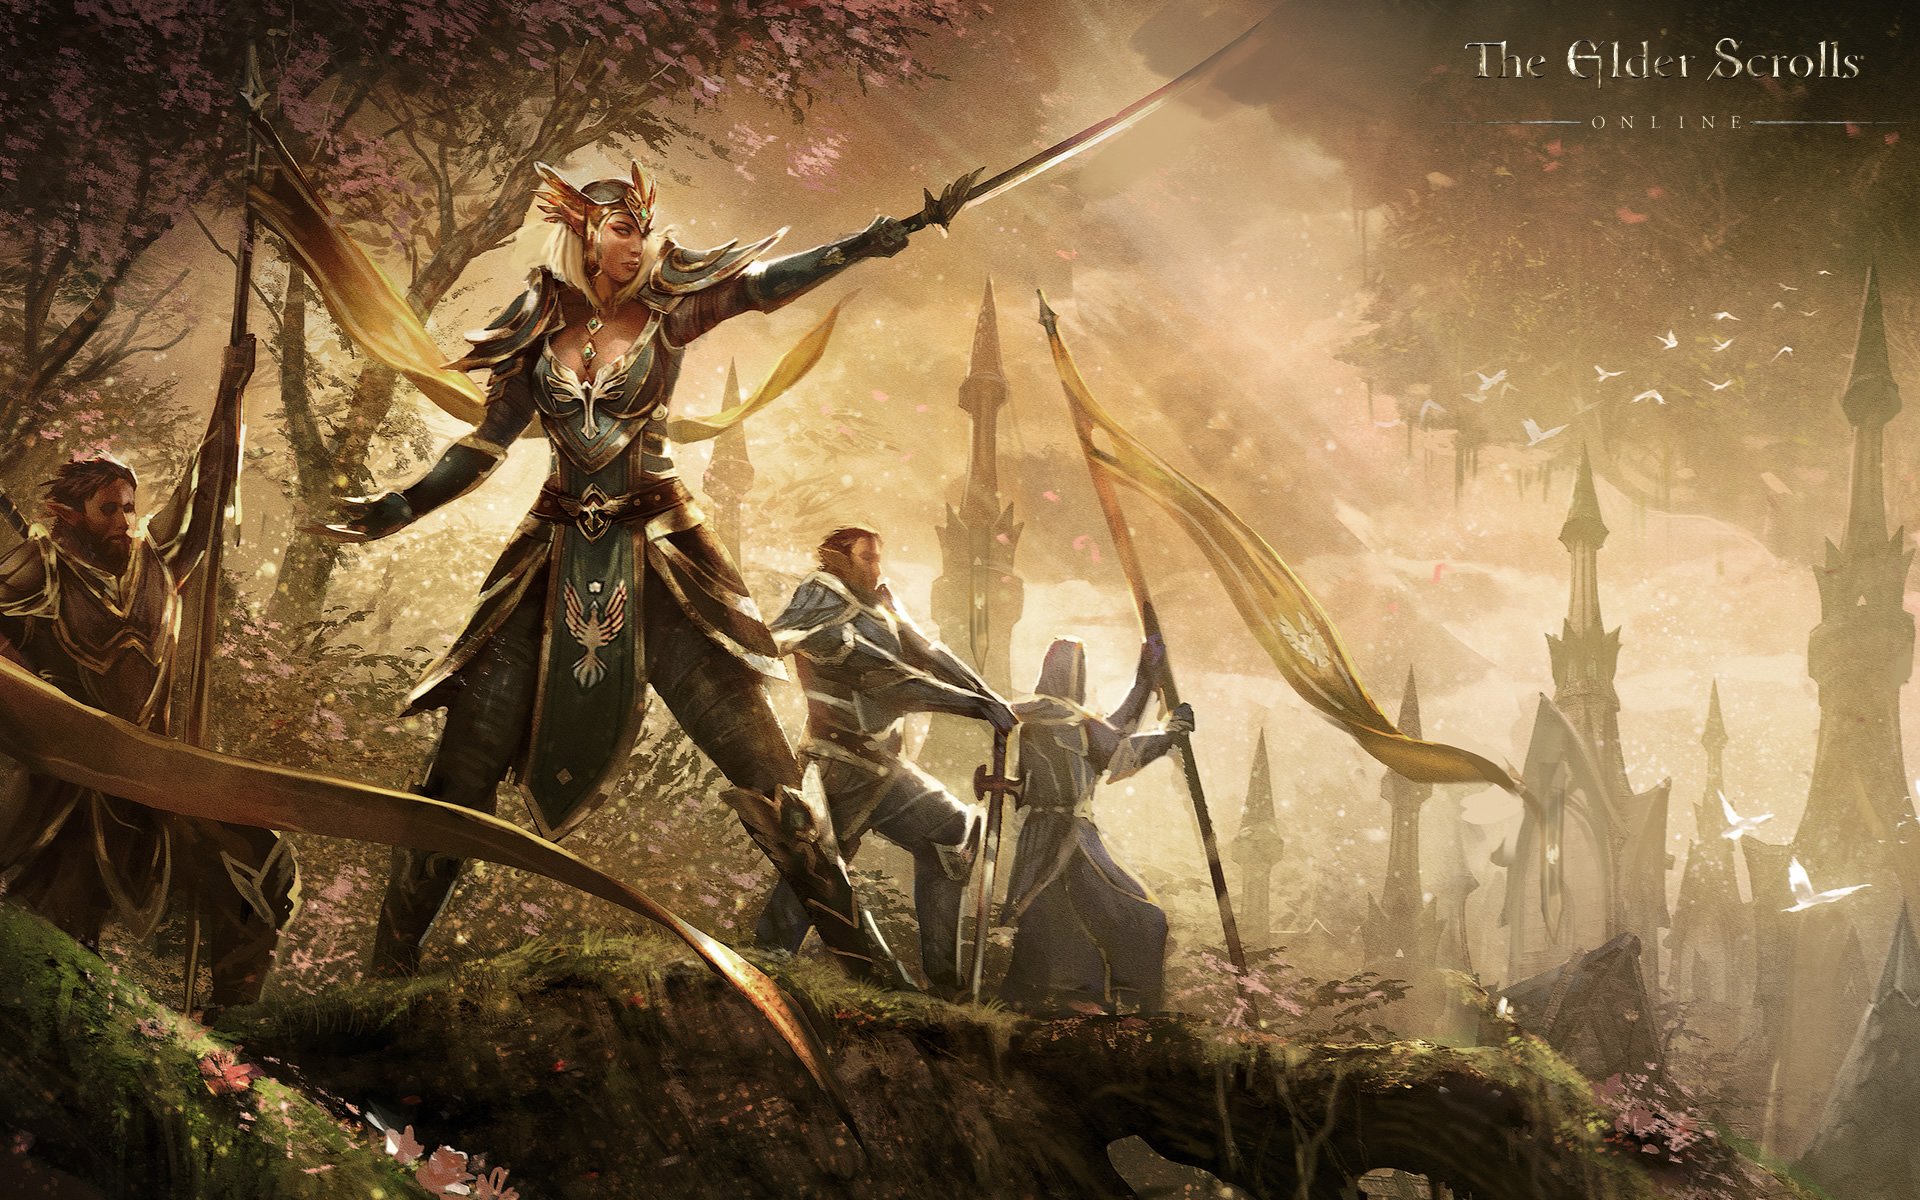 The Elder Scrolls Online Release Date: April 4